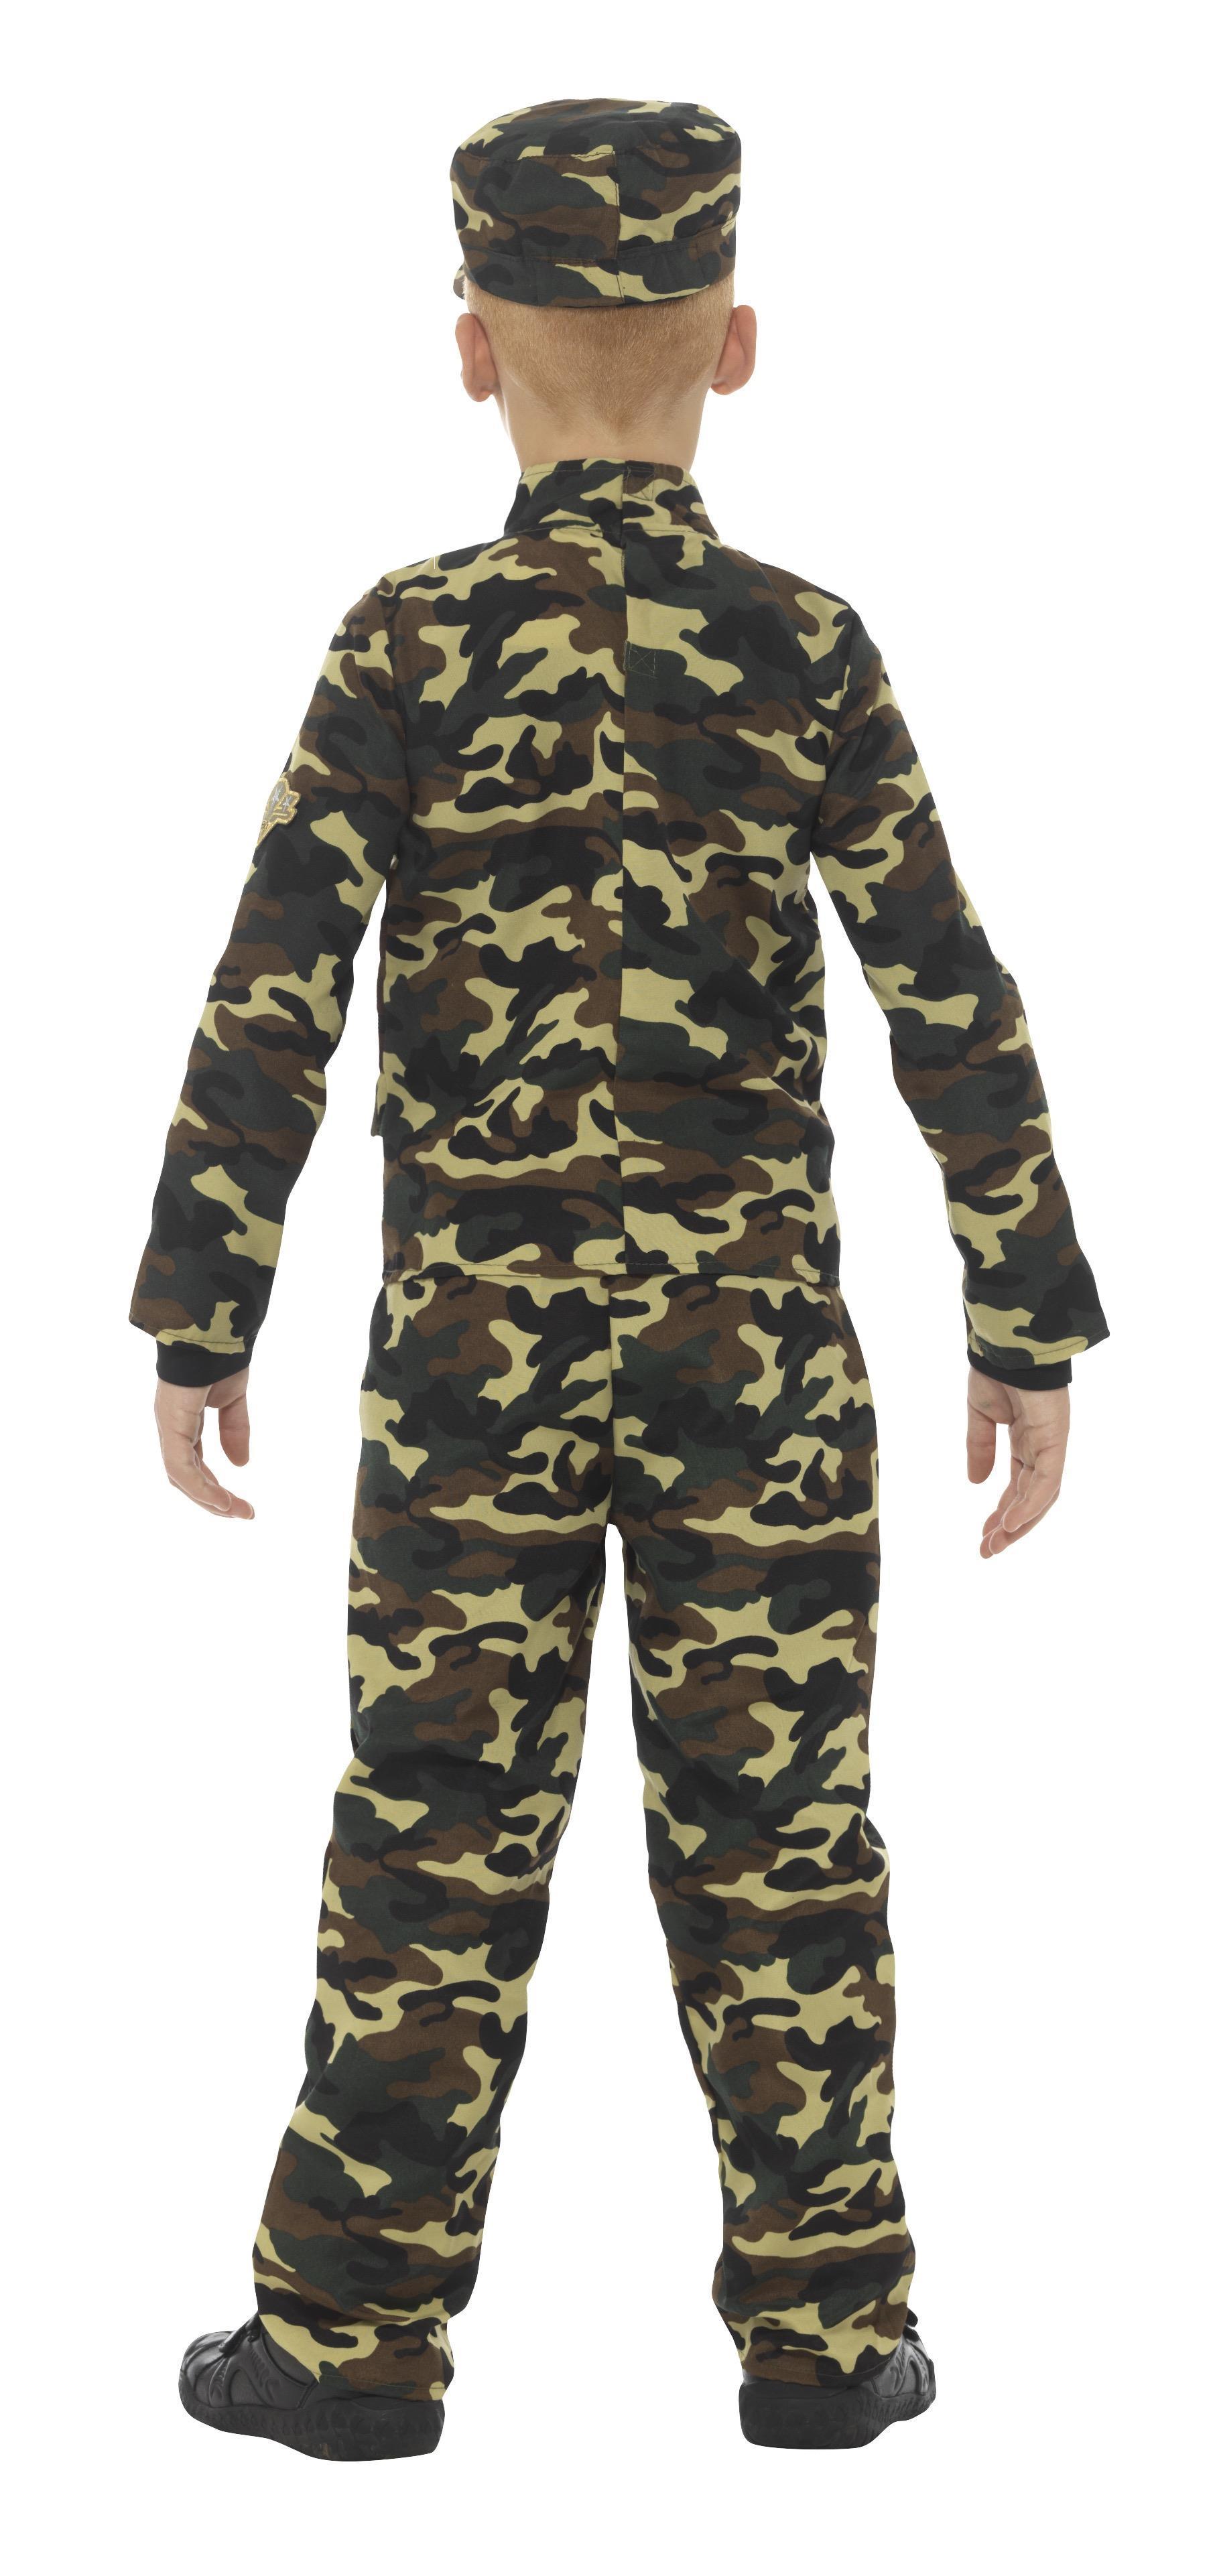 Kids Camouflage Military Boy Costume